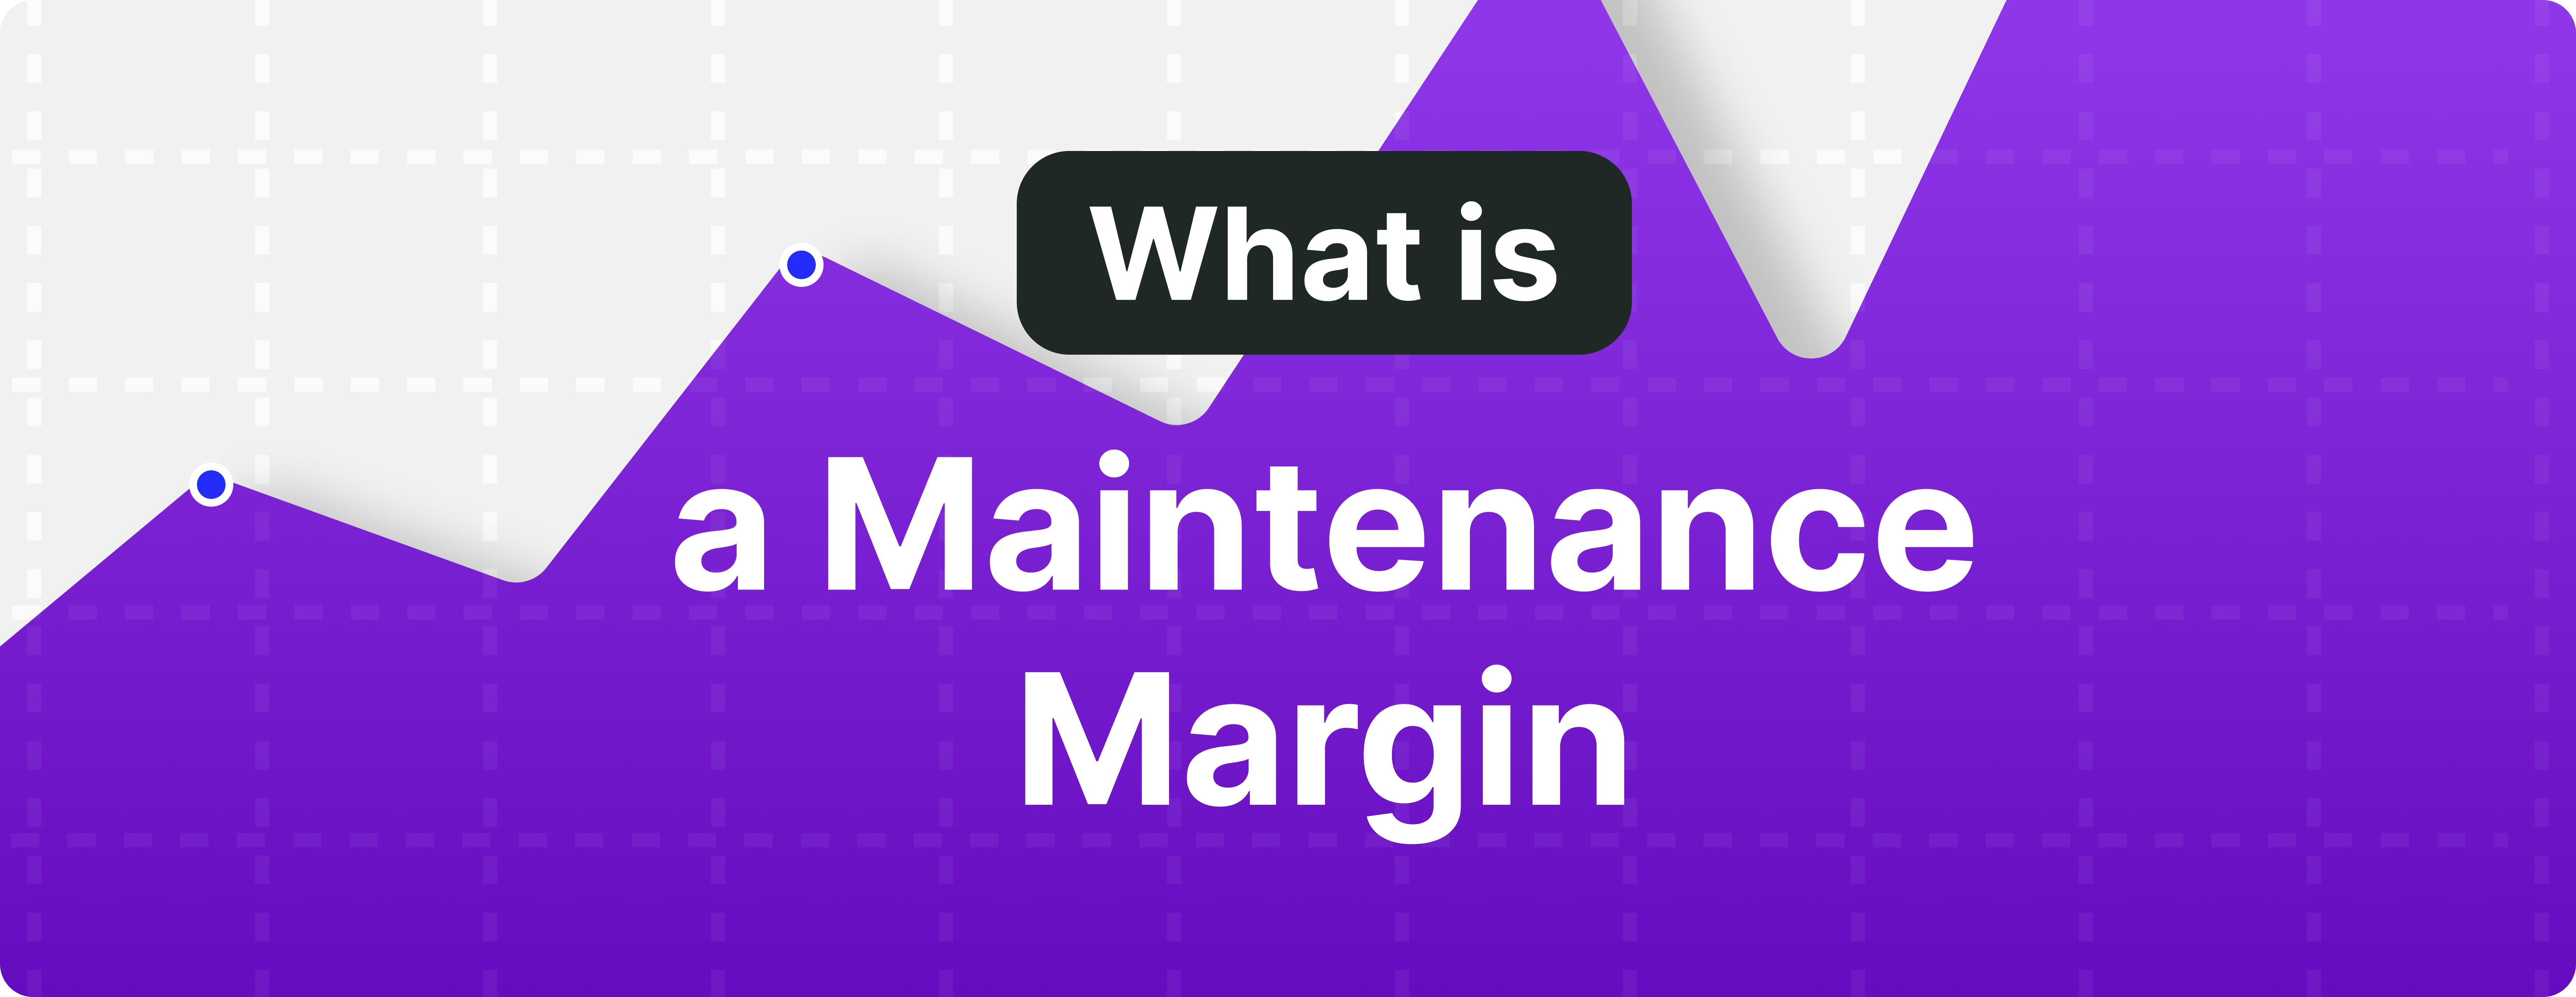 What is a Maintenance Margin